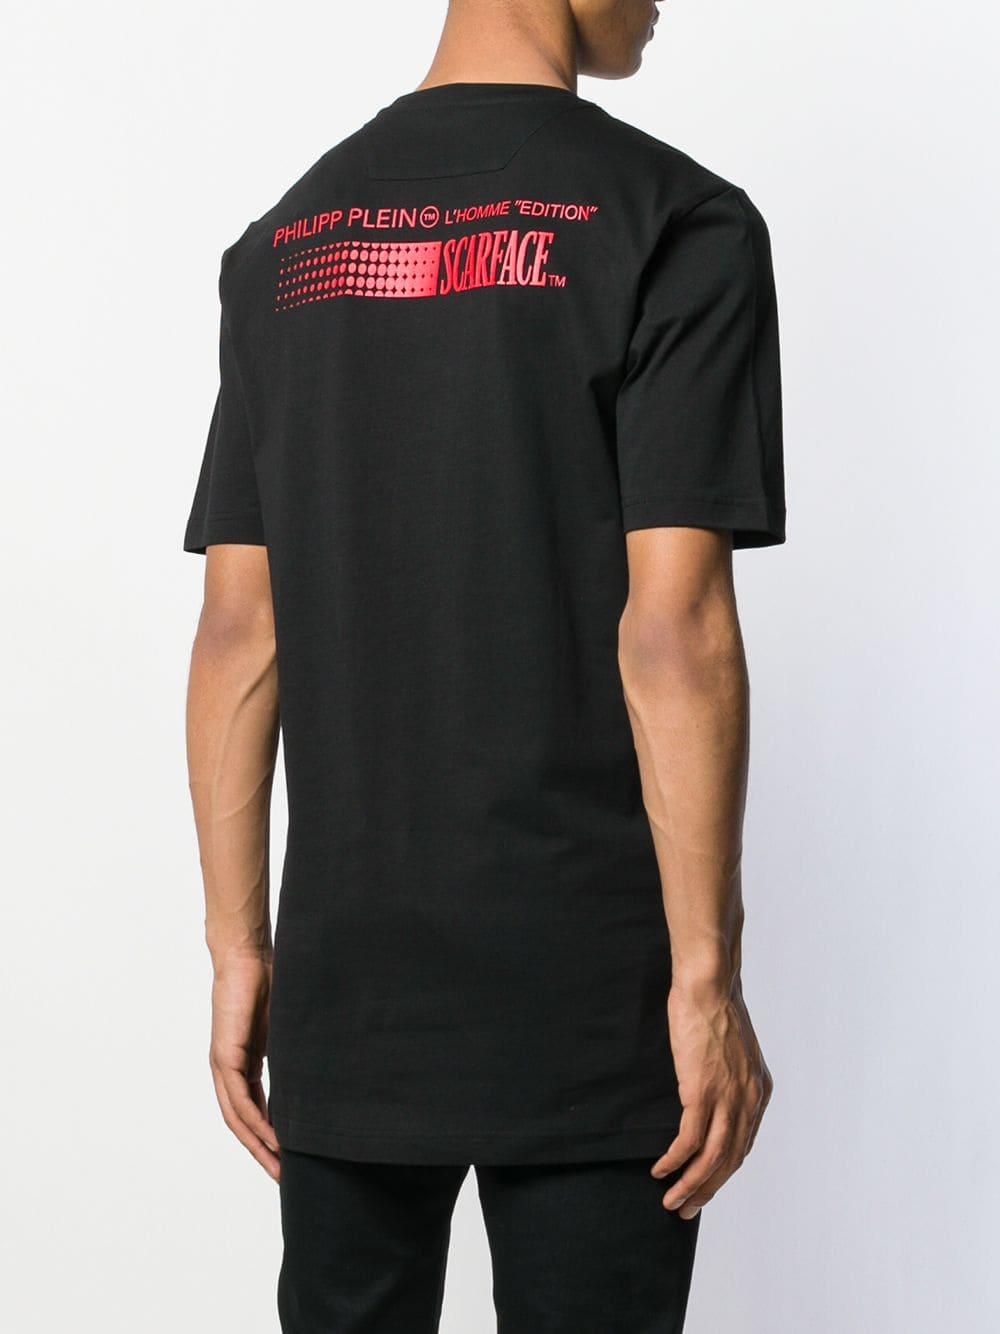 Philipp Plein Scarface T-shirt in Black for Men - Lyst